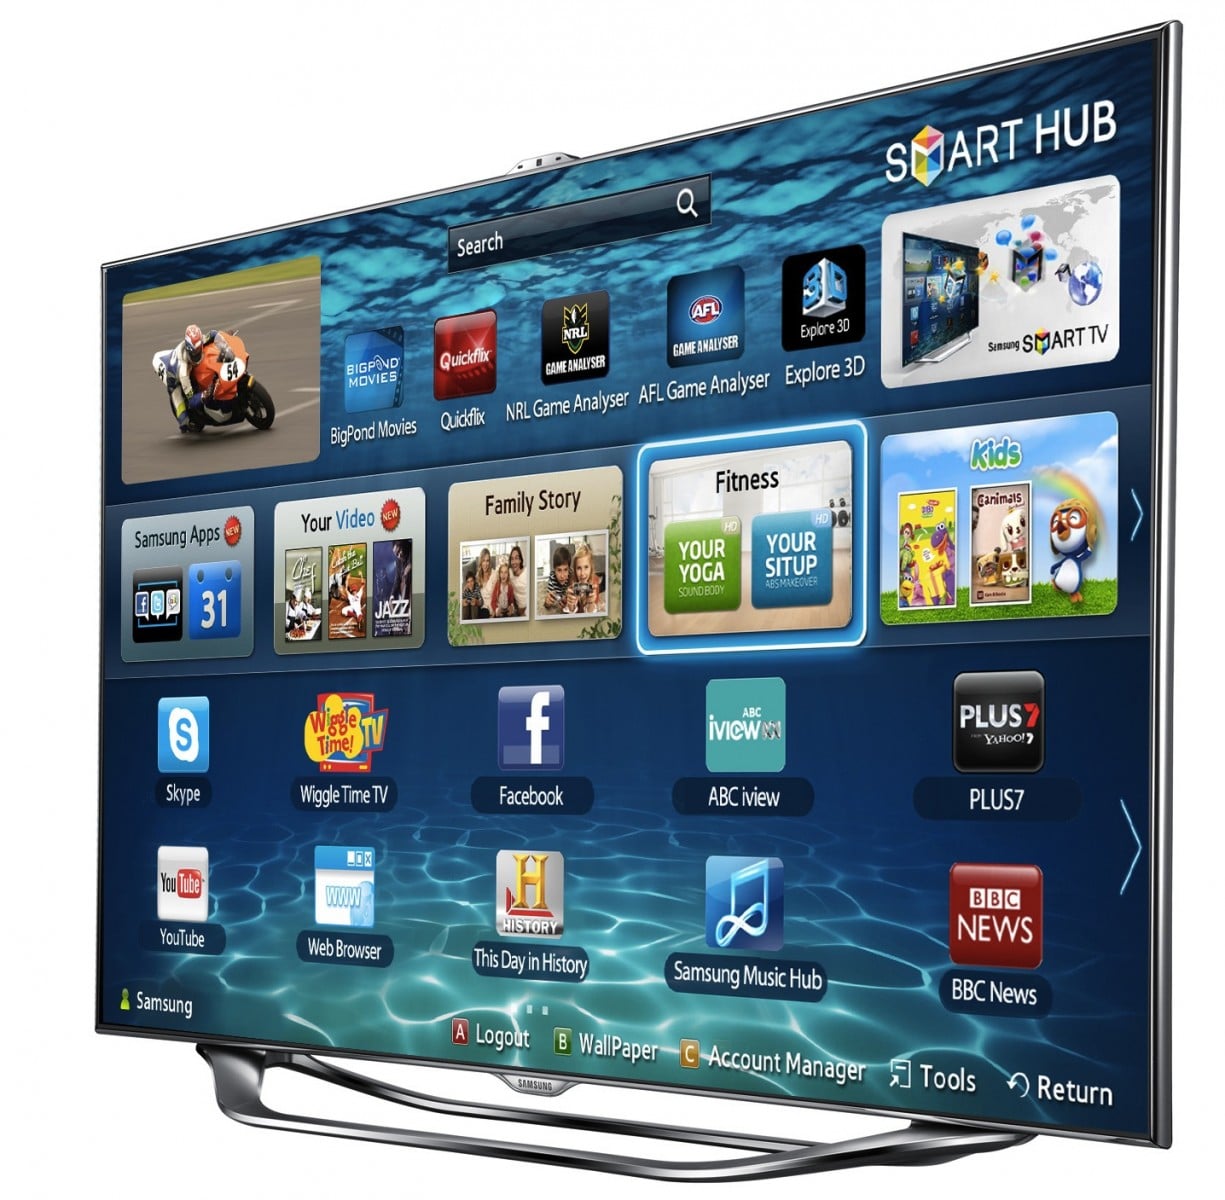 Presto App Added To Samsung Smart TVs